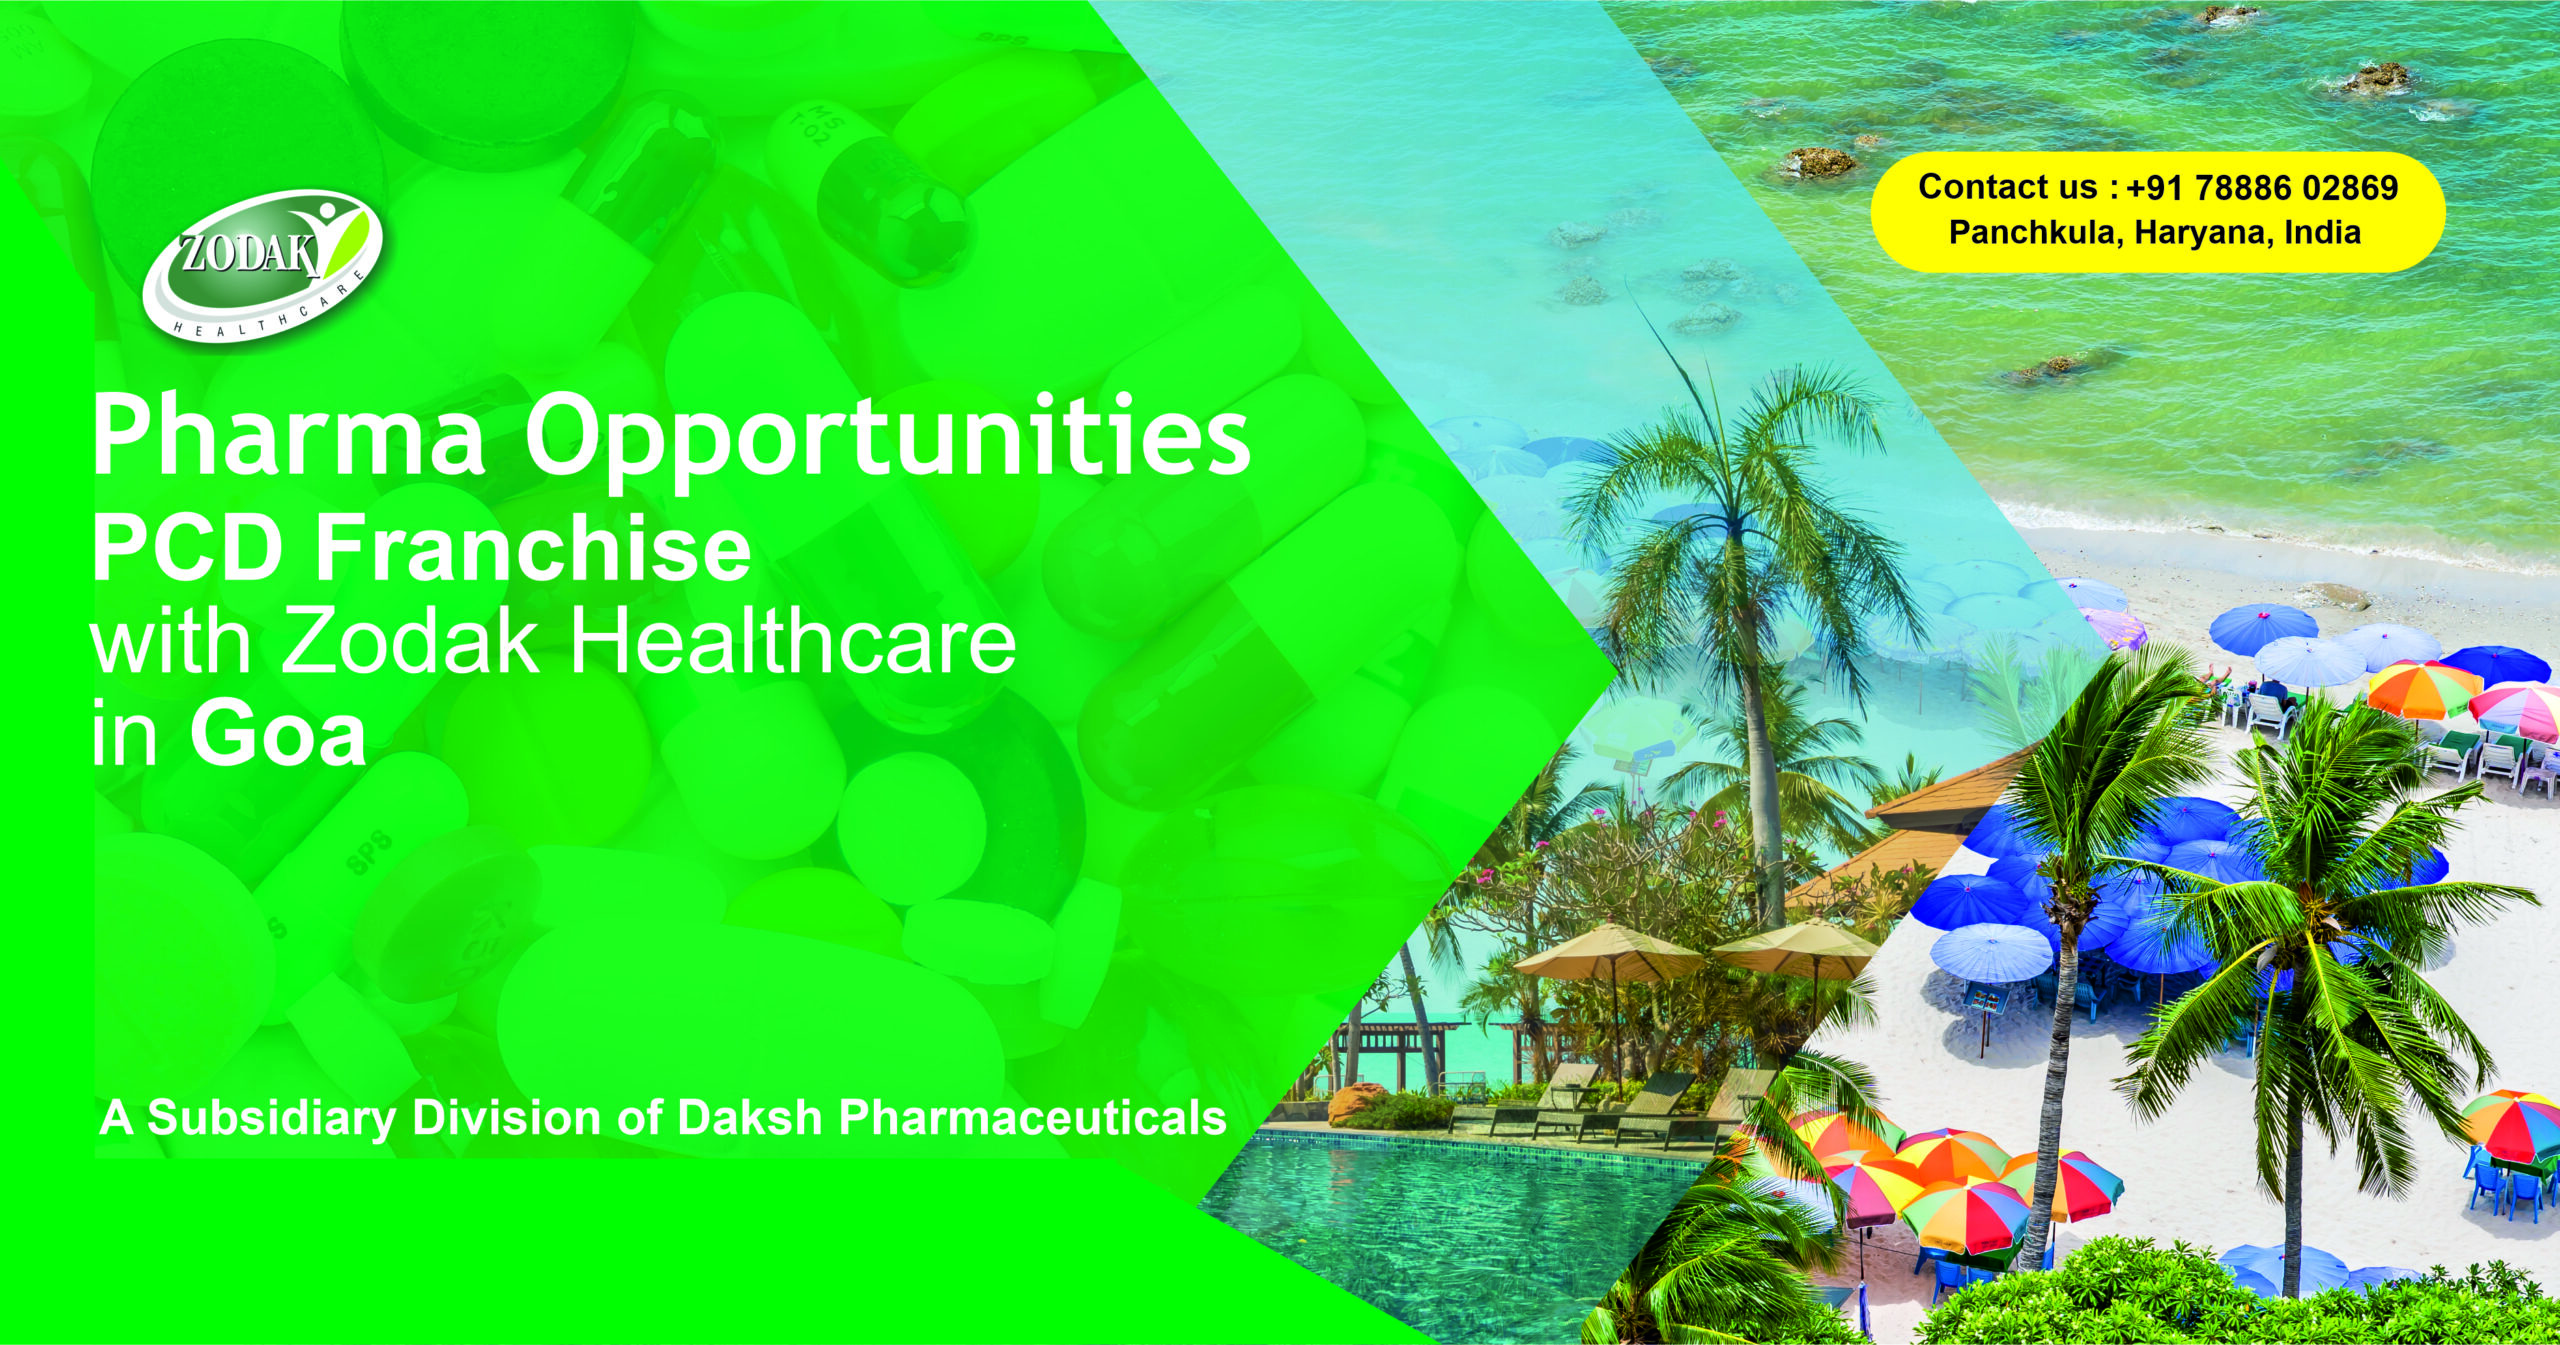 Pharma Opportunities: PCD Franchise with Zodak Healthcare in Goa